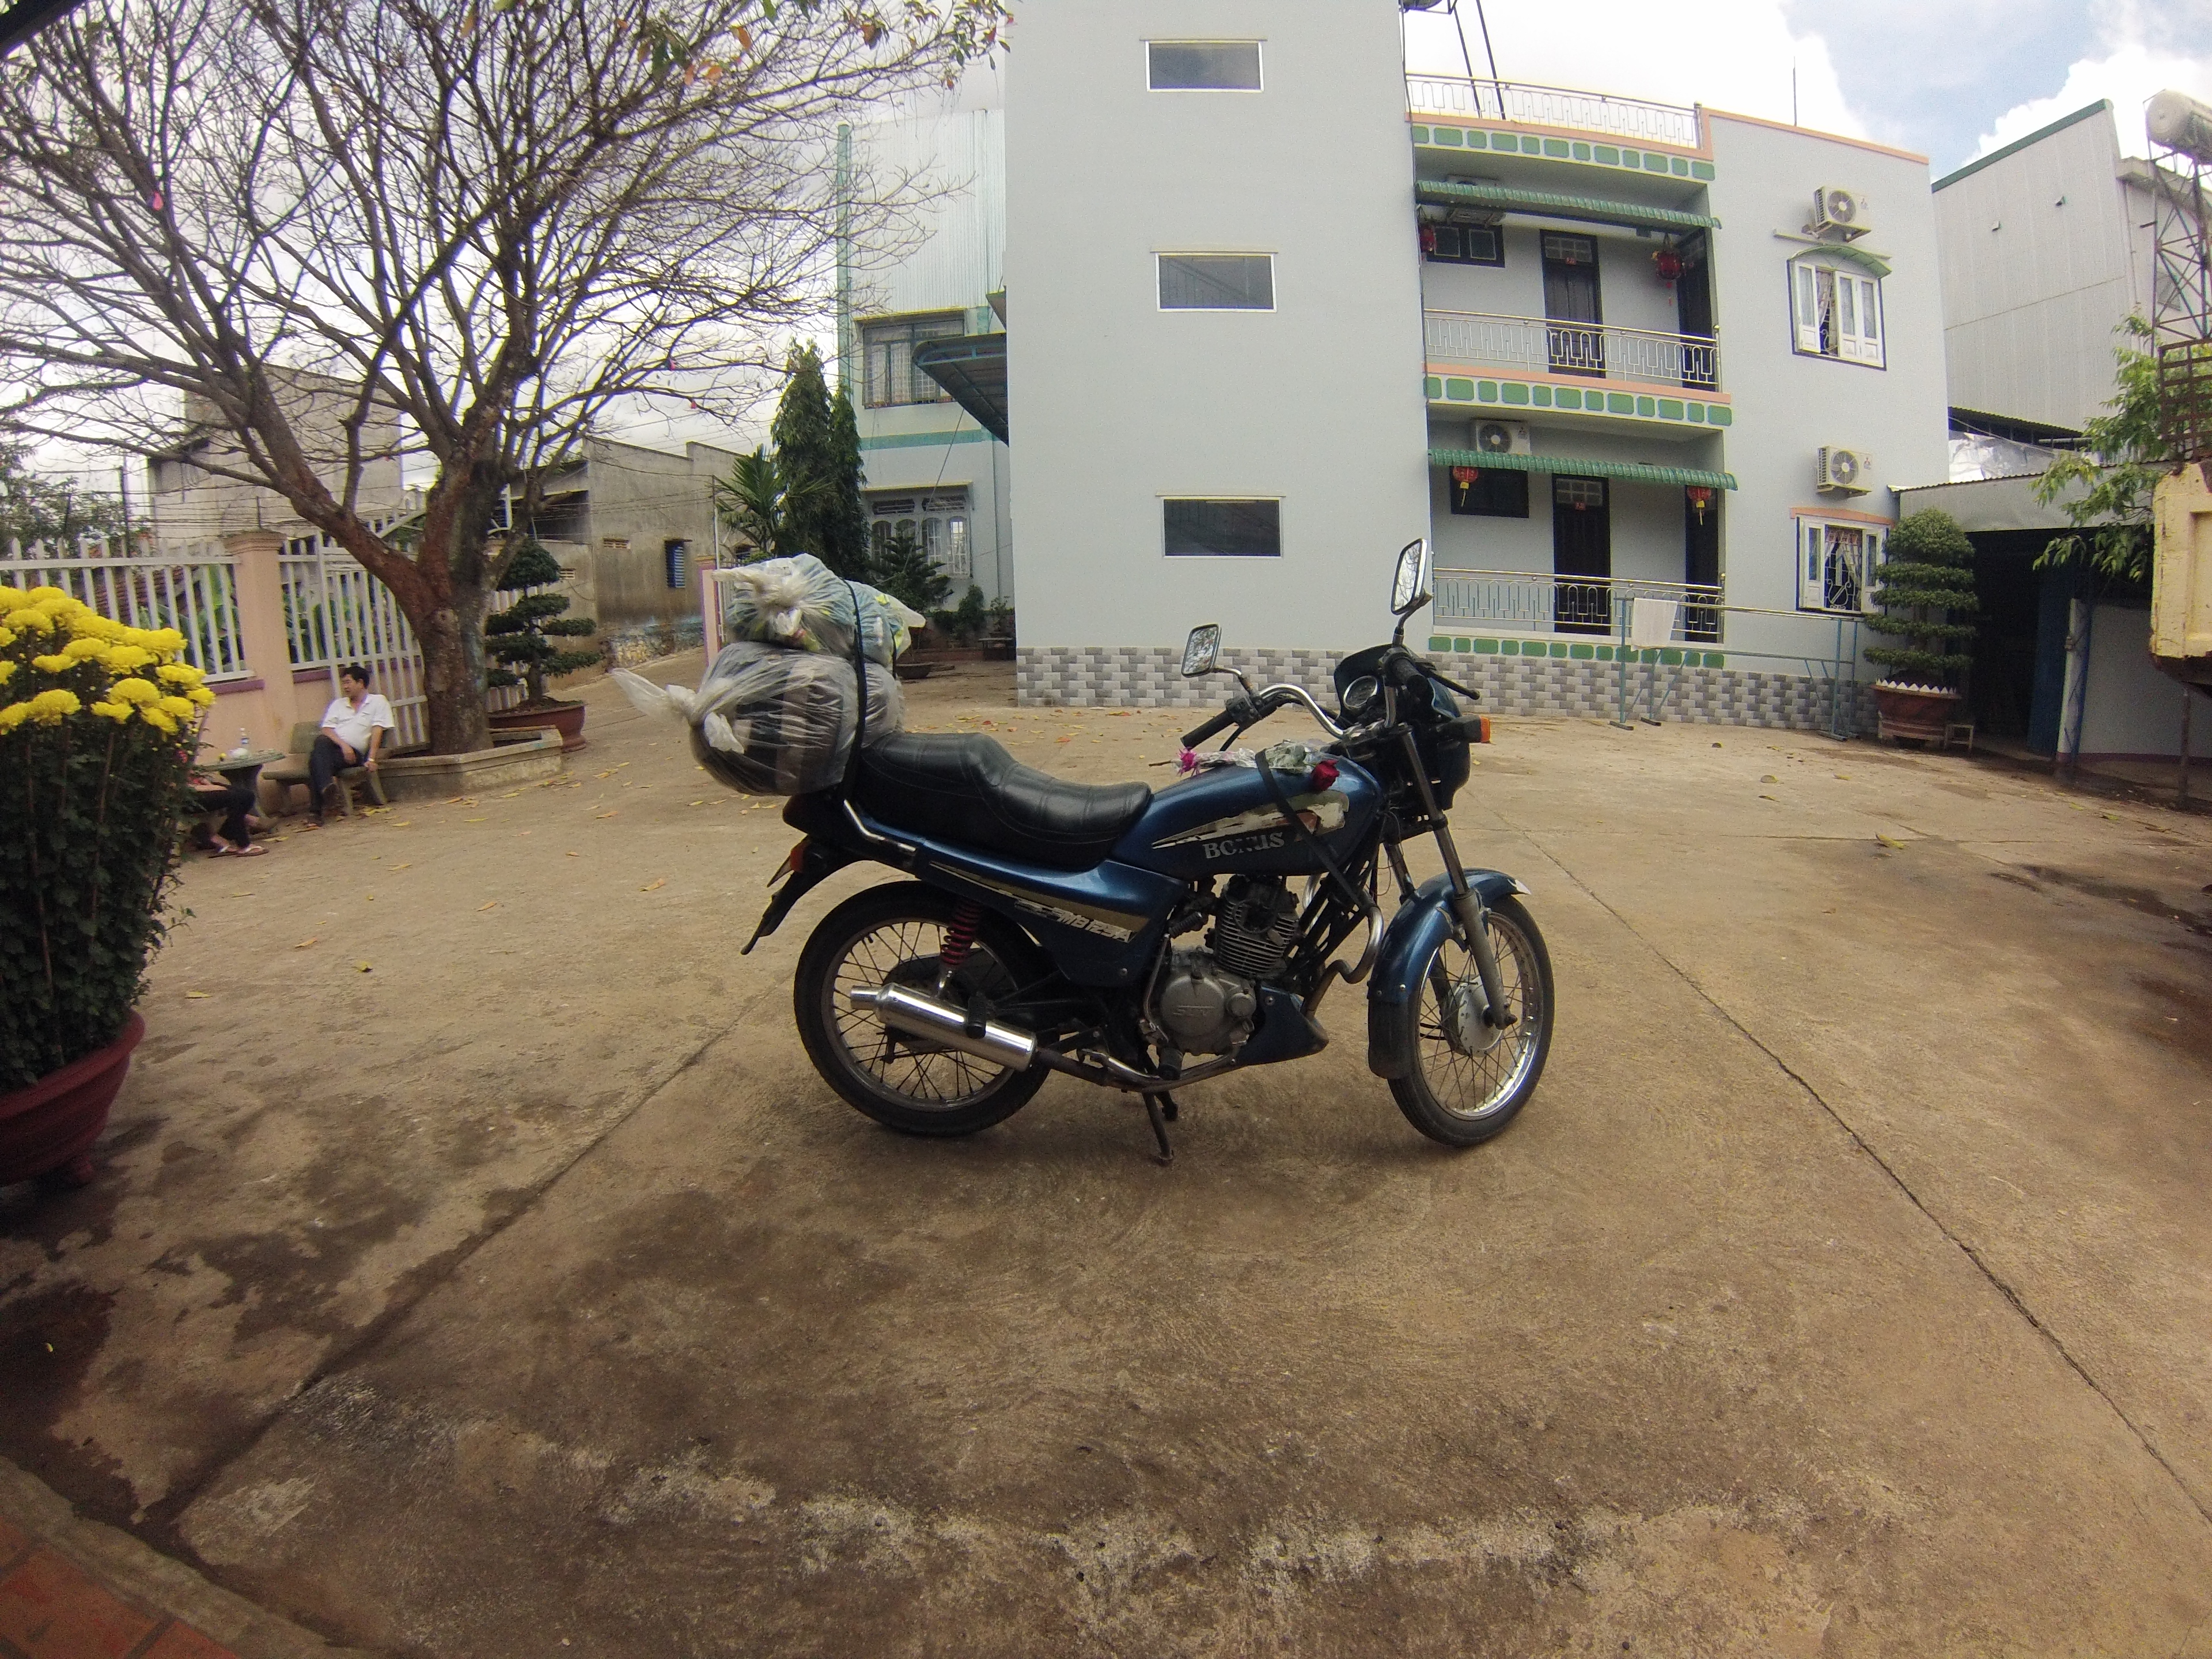 Read more about the article Motorbiking around Vietnam